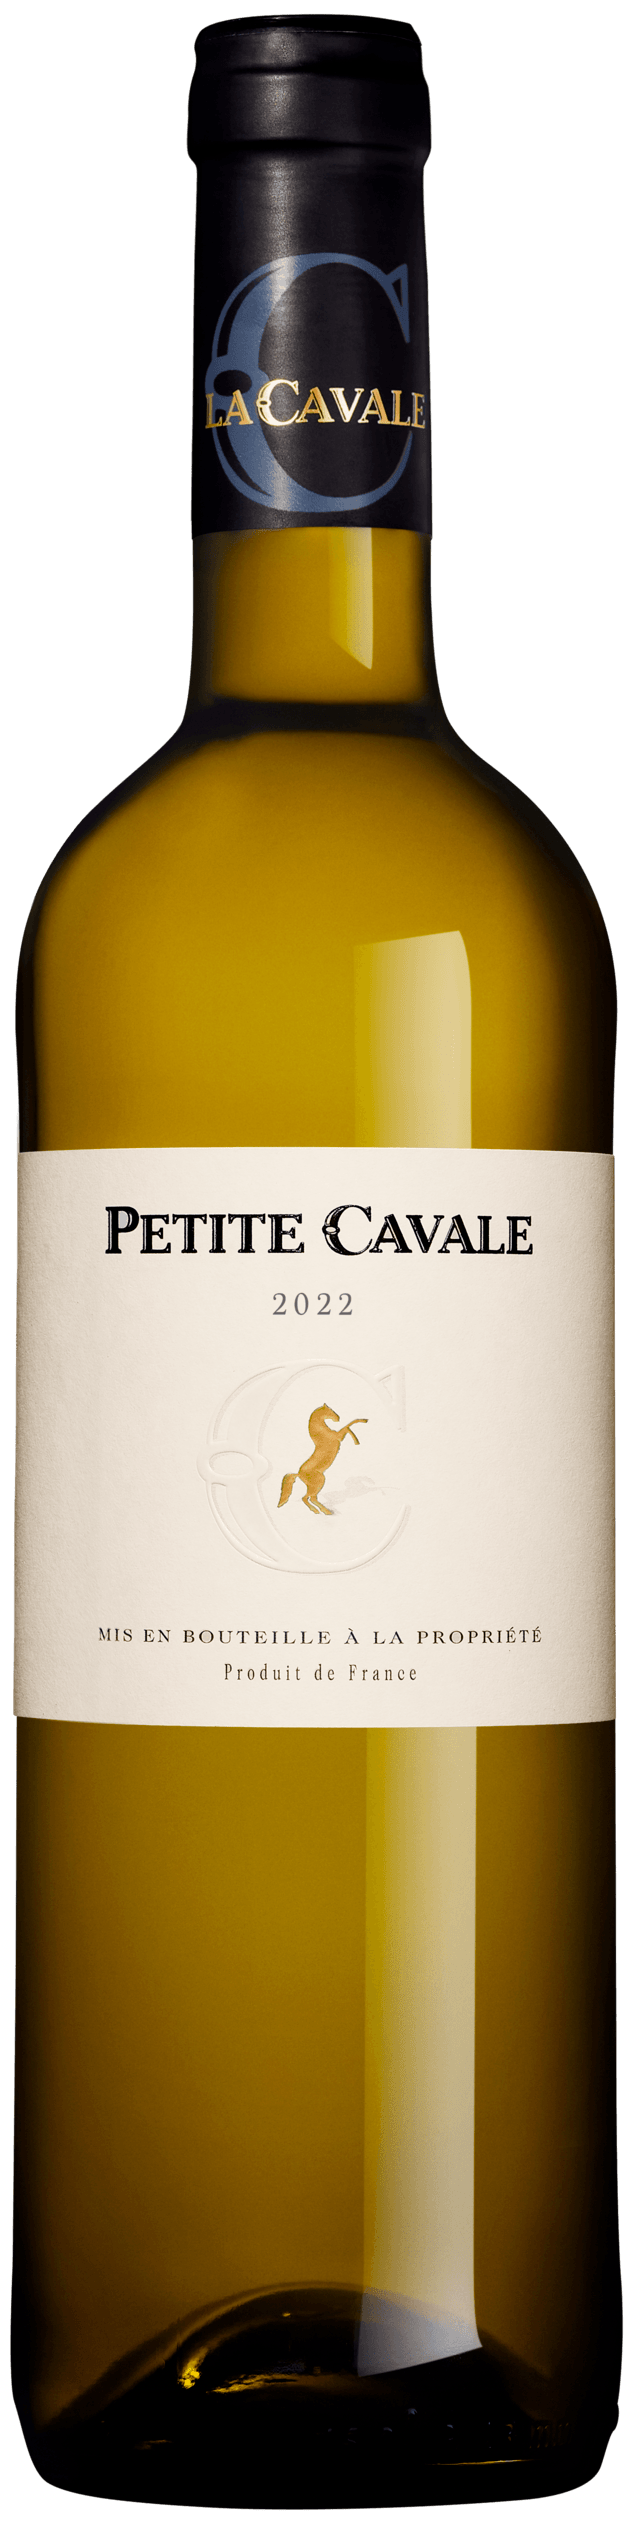 Petite Cavale blanc 2022 - Domaine La Cavale